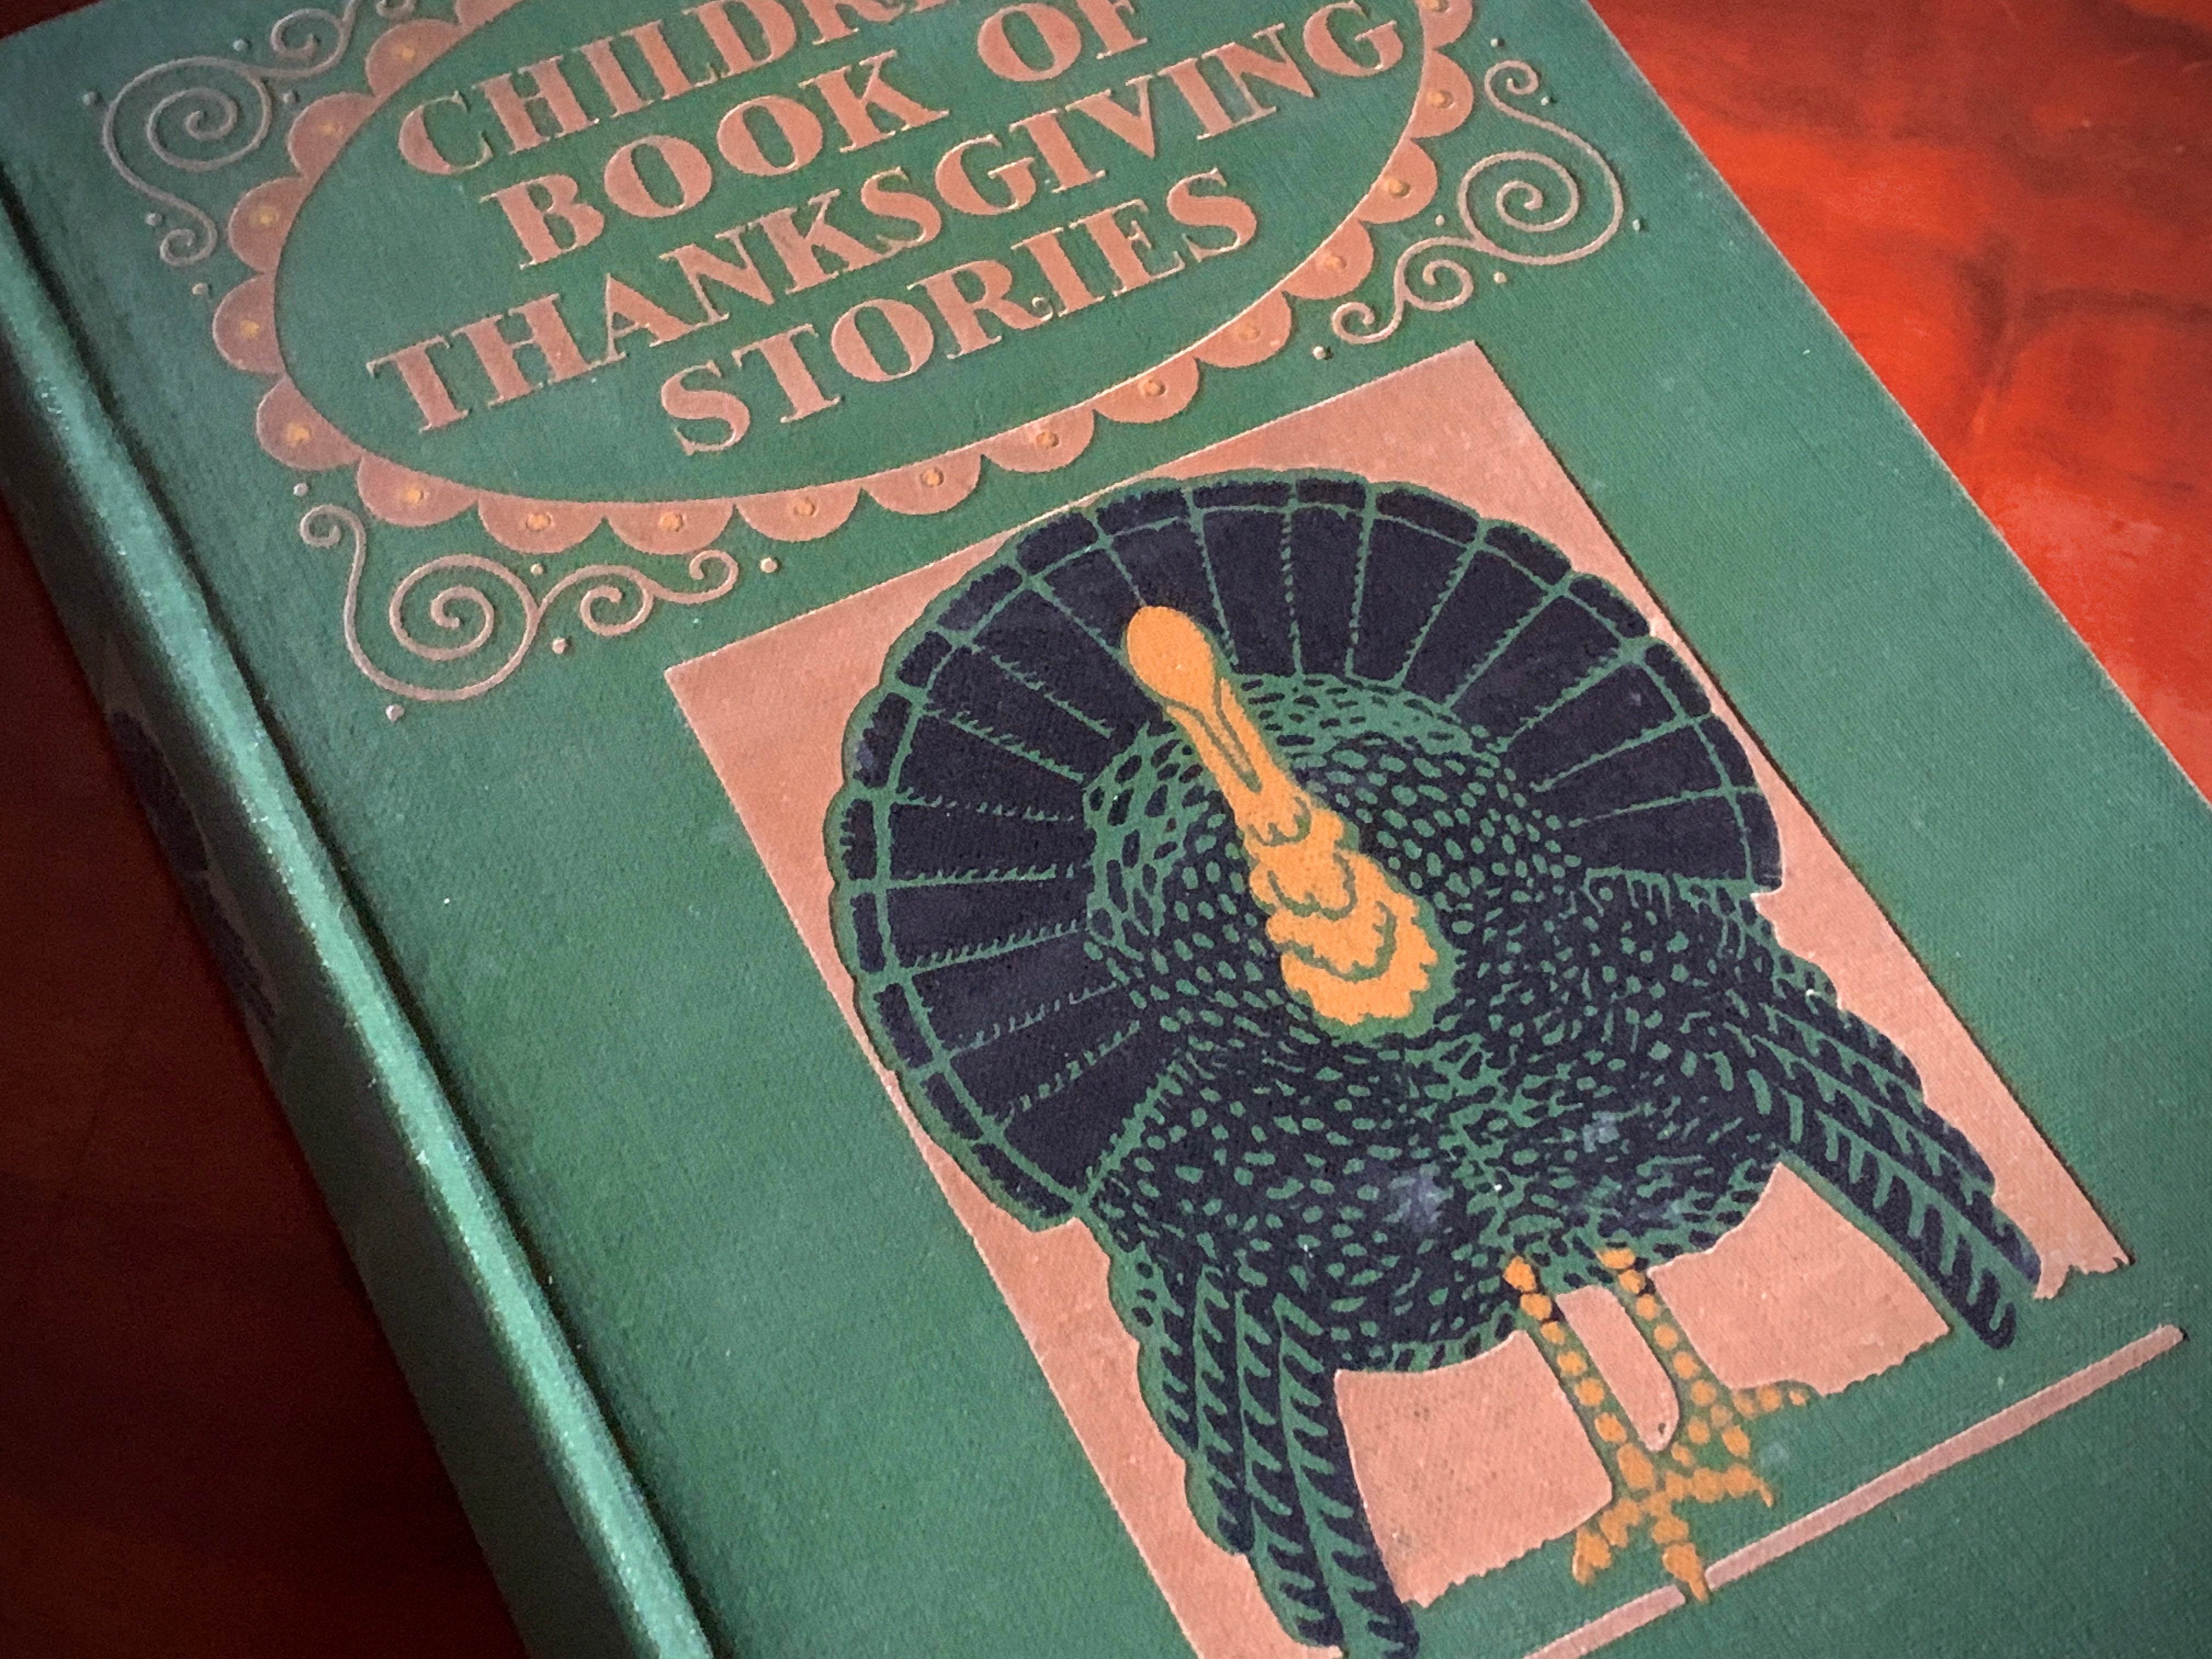 Children's Book of Thanksgiving Stories, Asa Don Dickinson (Ed), Illustrated, 1st Ed, Rare, 1915